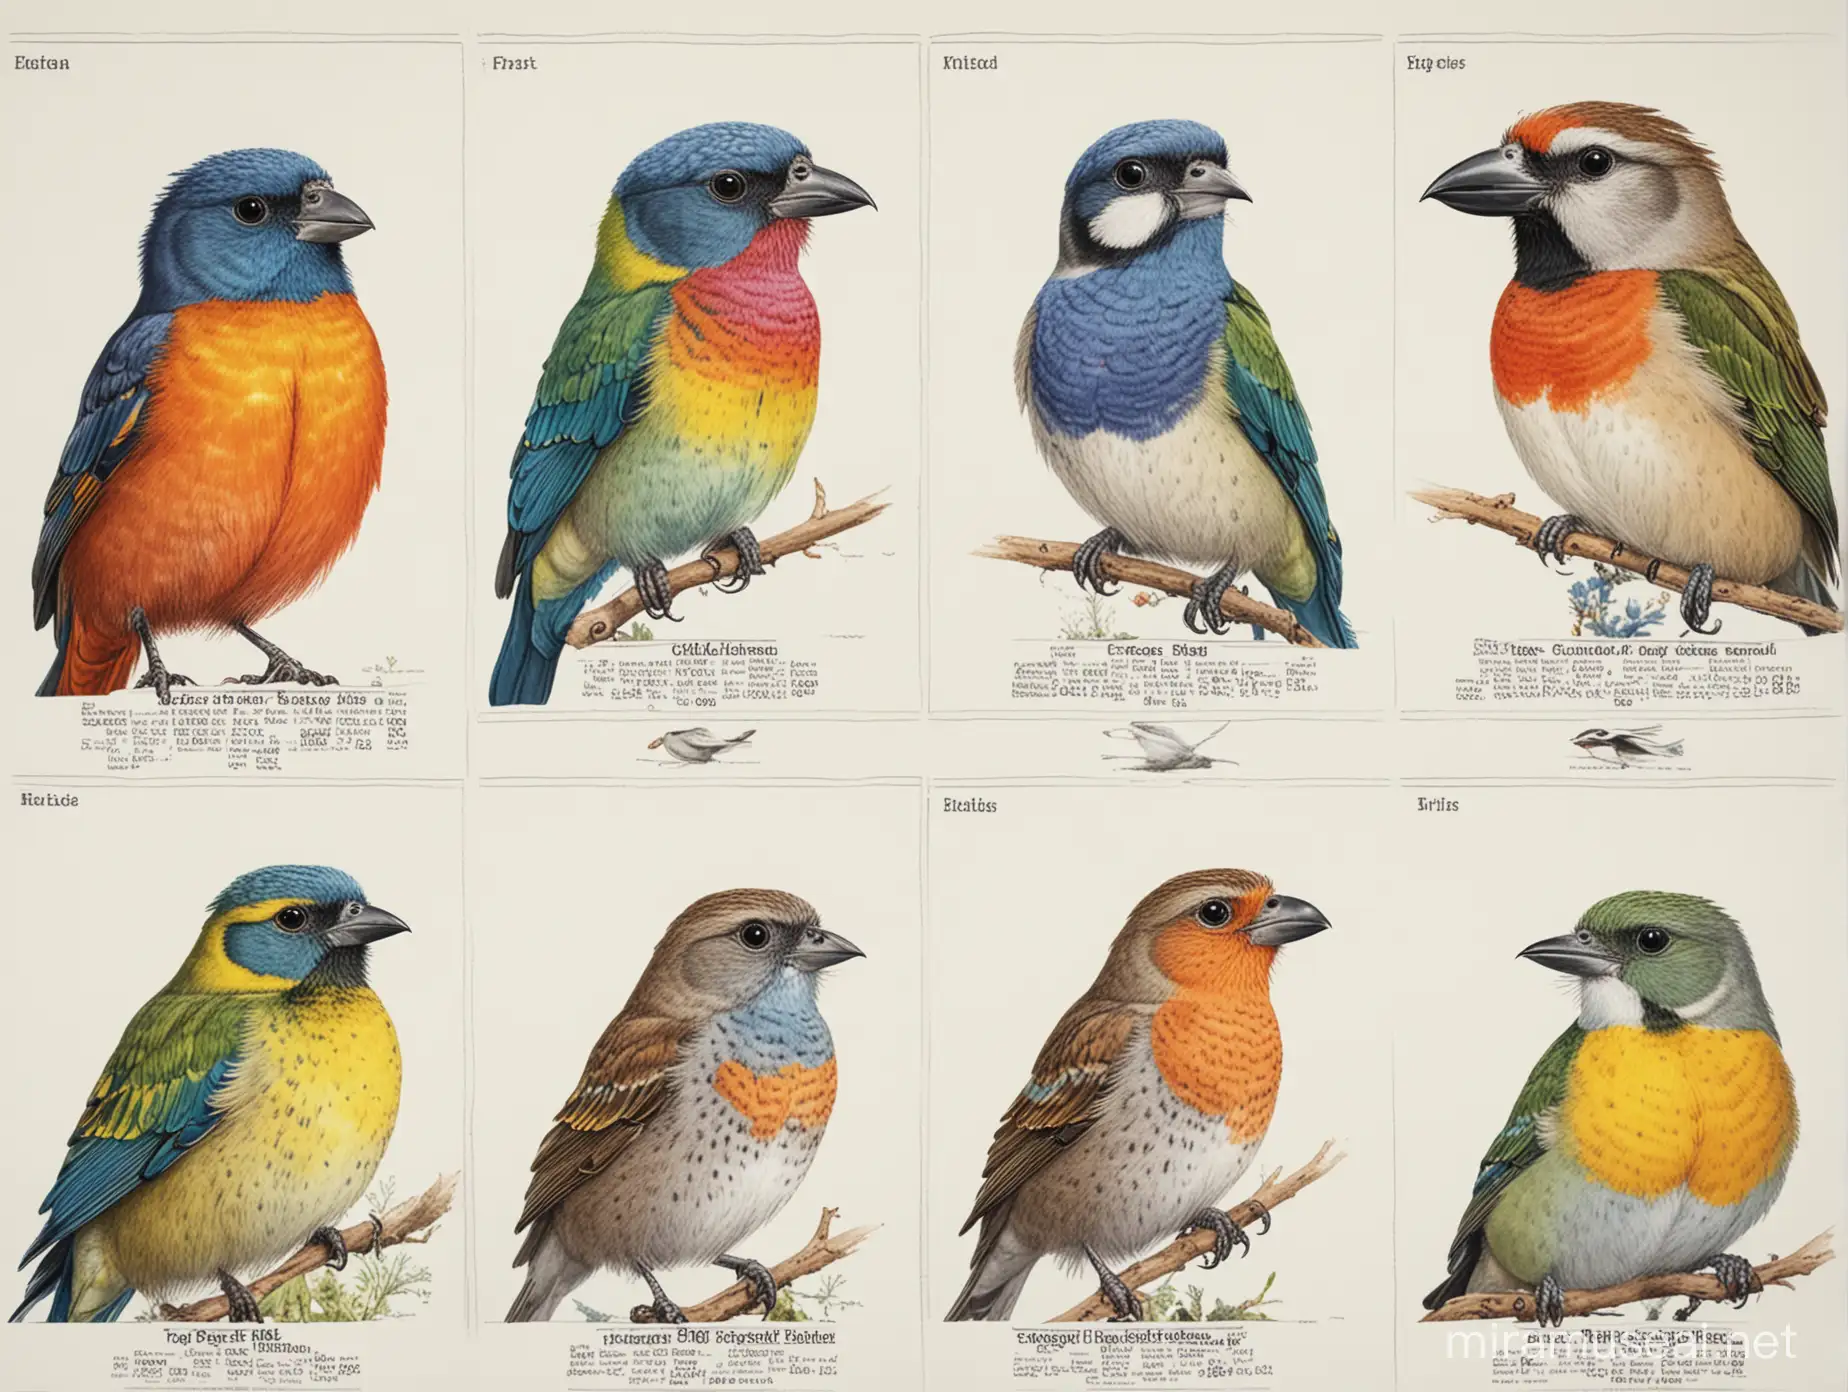 Topical bird cololring poster